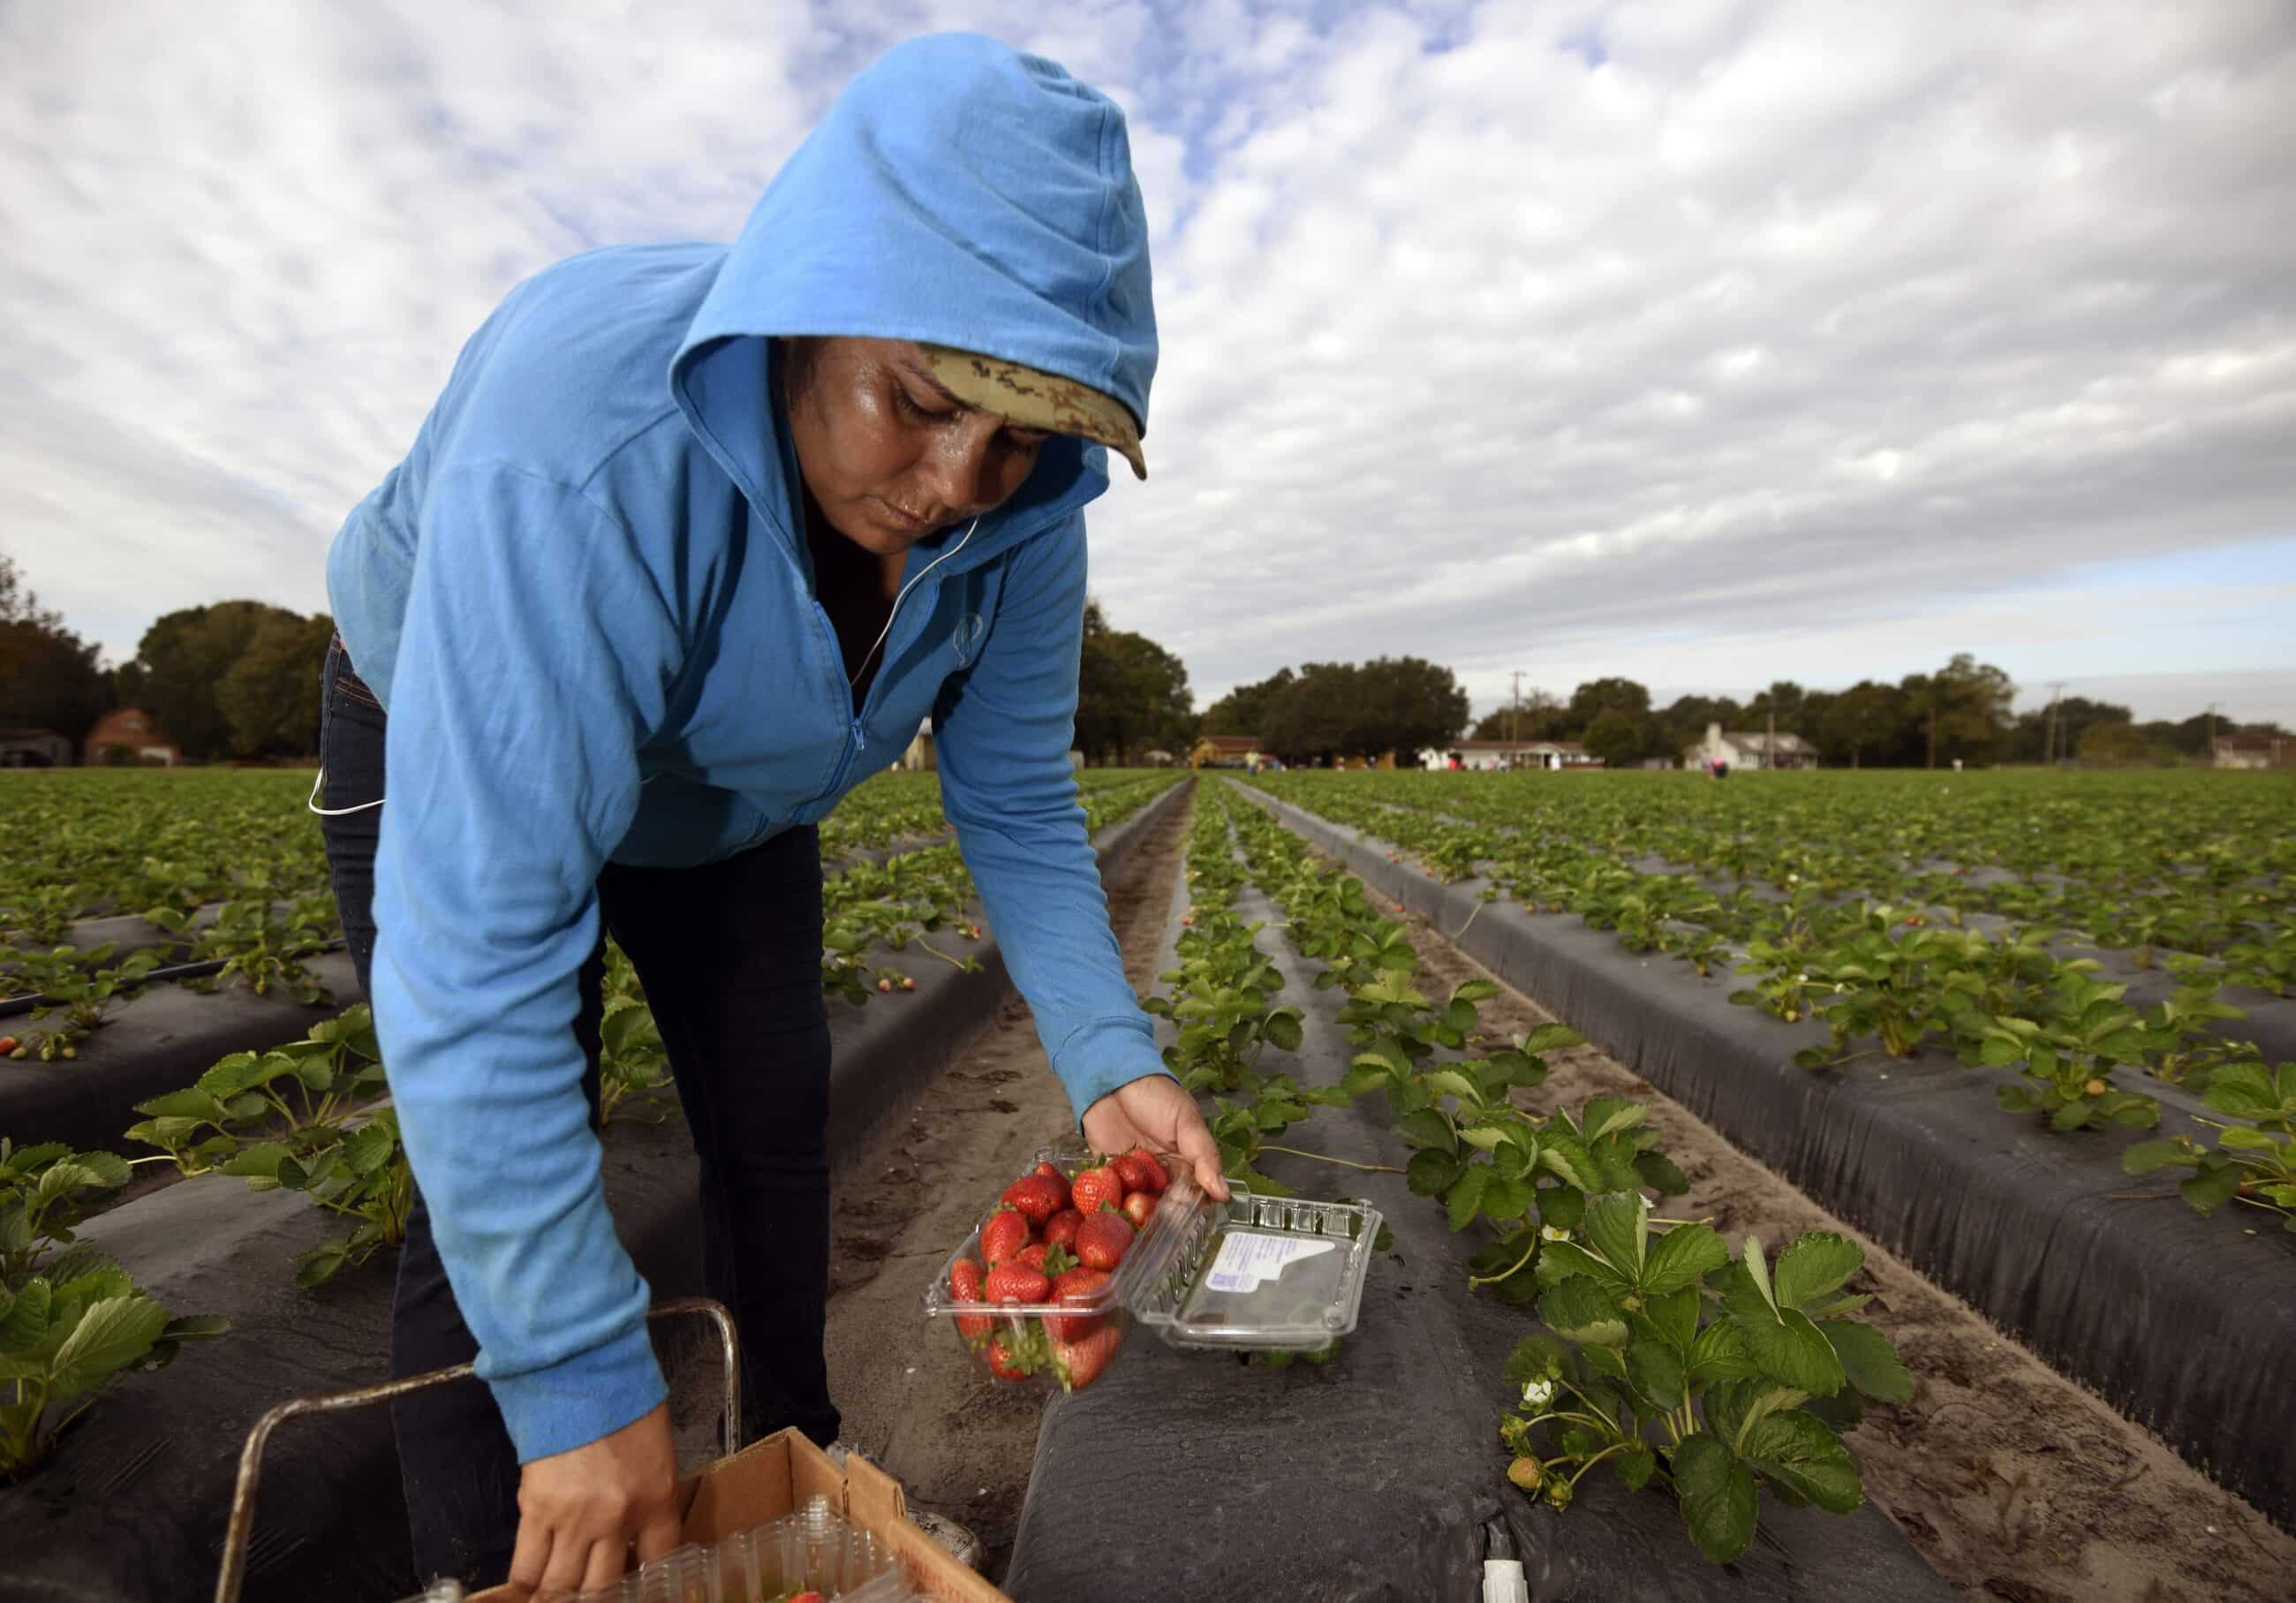 A farm worker harvesting strawberries